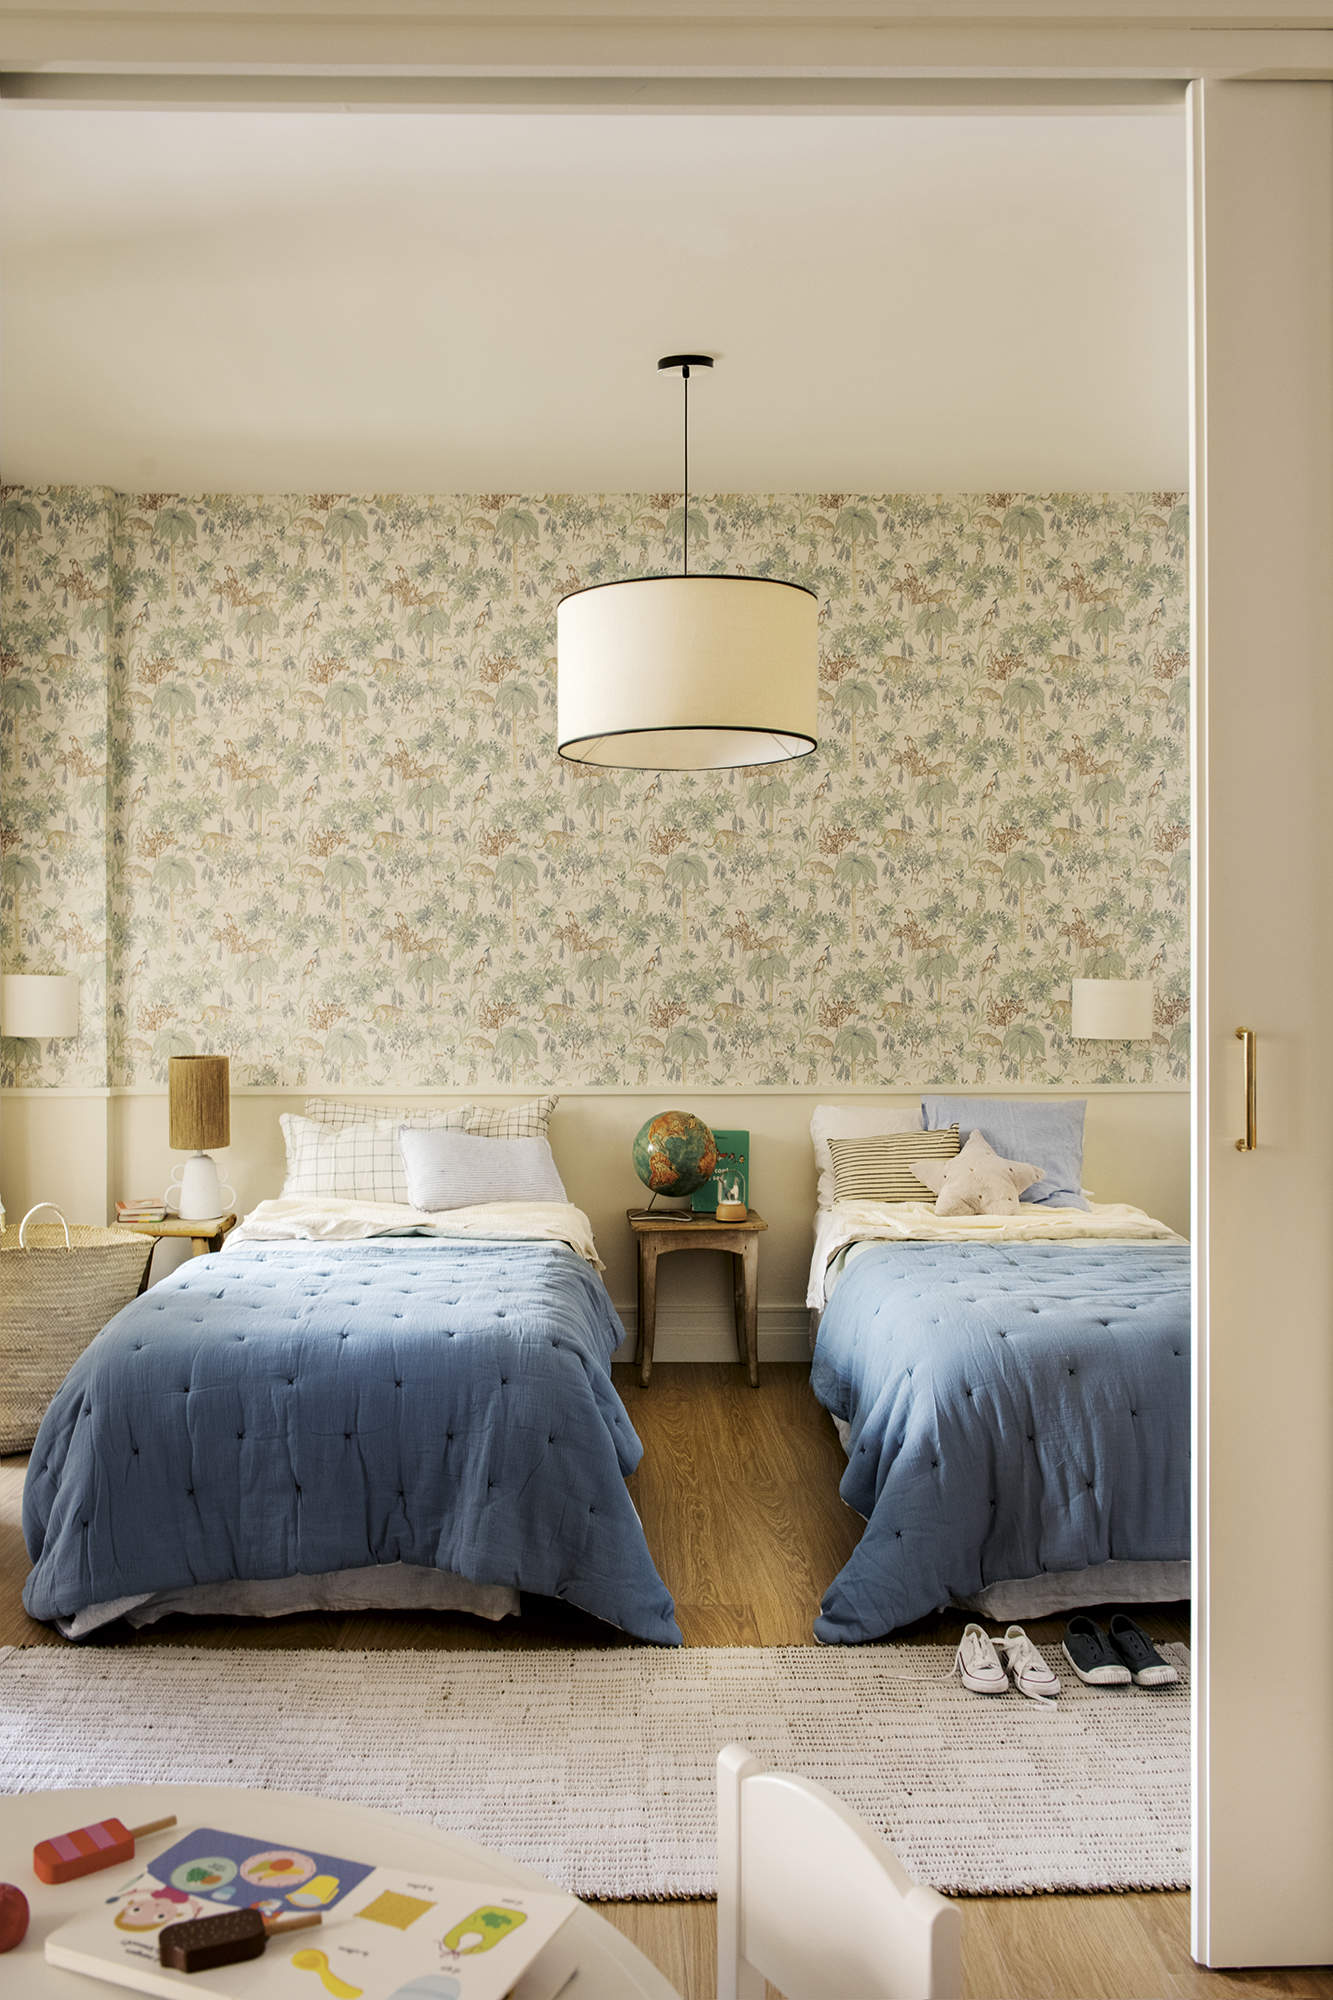 Dormitorio, cama individual, colcha azul, empapelado, lámpara de techo, alfombra.